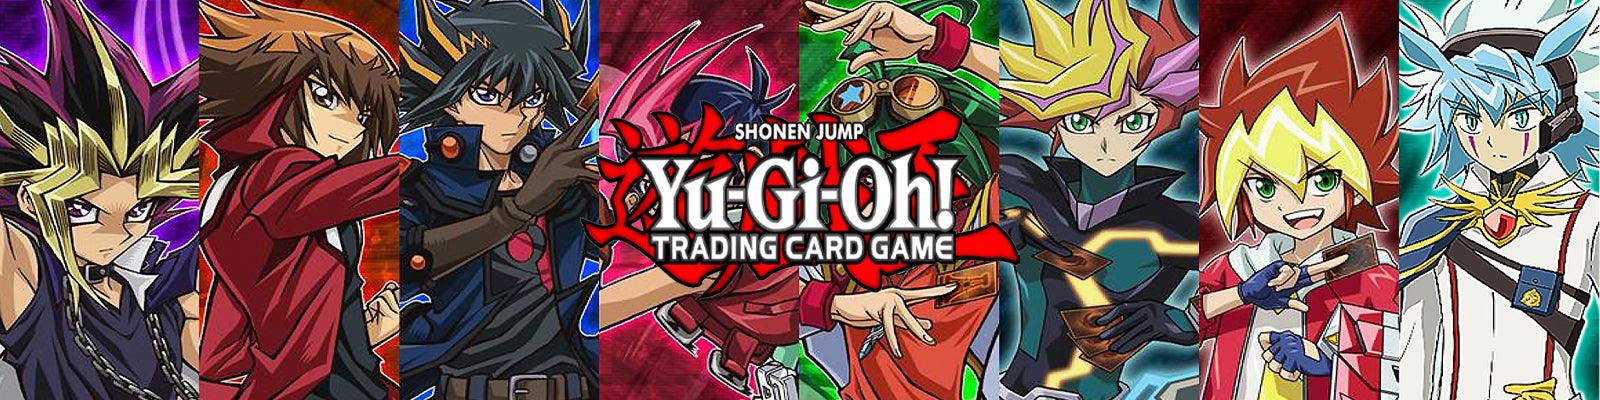 Yu-Gi-Oh_Image_Banner_Mobile - Romulus Games